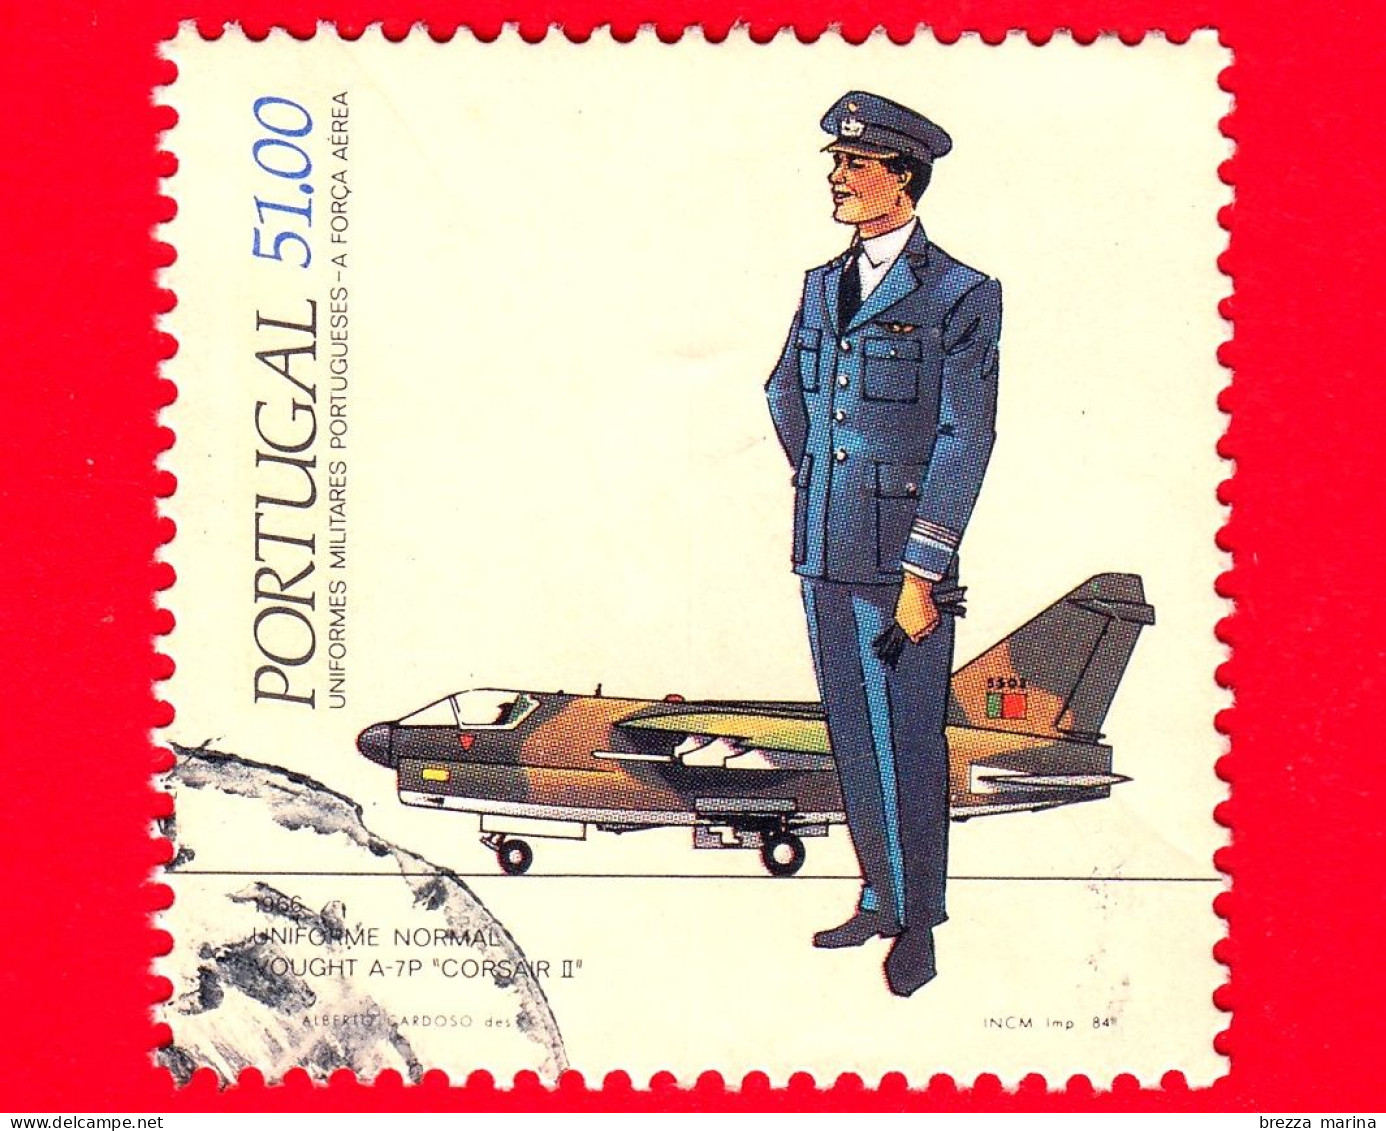 PORTOGALLO - Usato - 1984 - Uniformi Militari Portoghesi - Aeronautica - Corsair II - 51.00 - Used Stamps